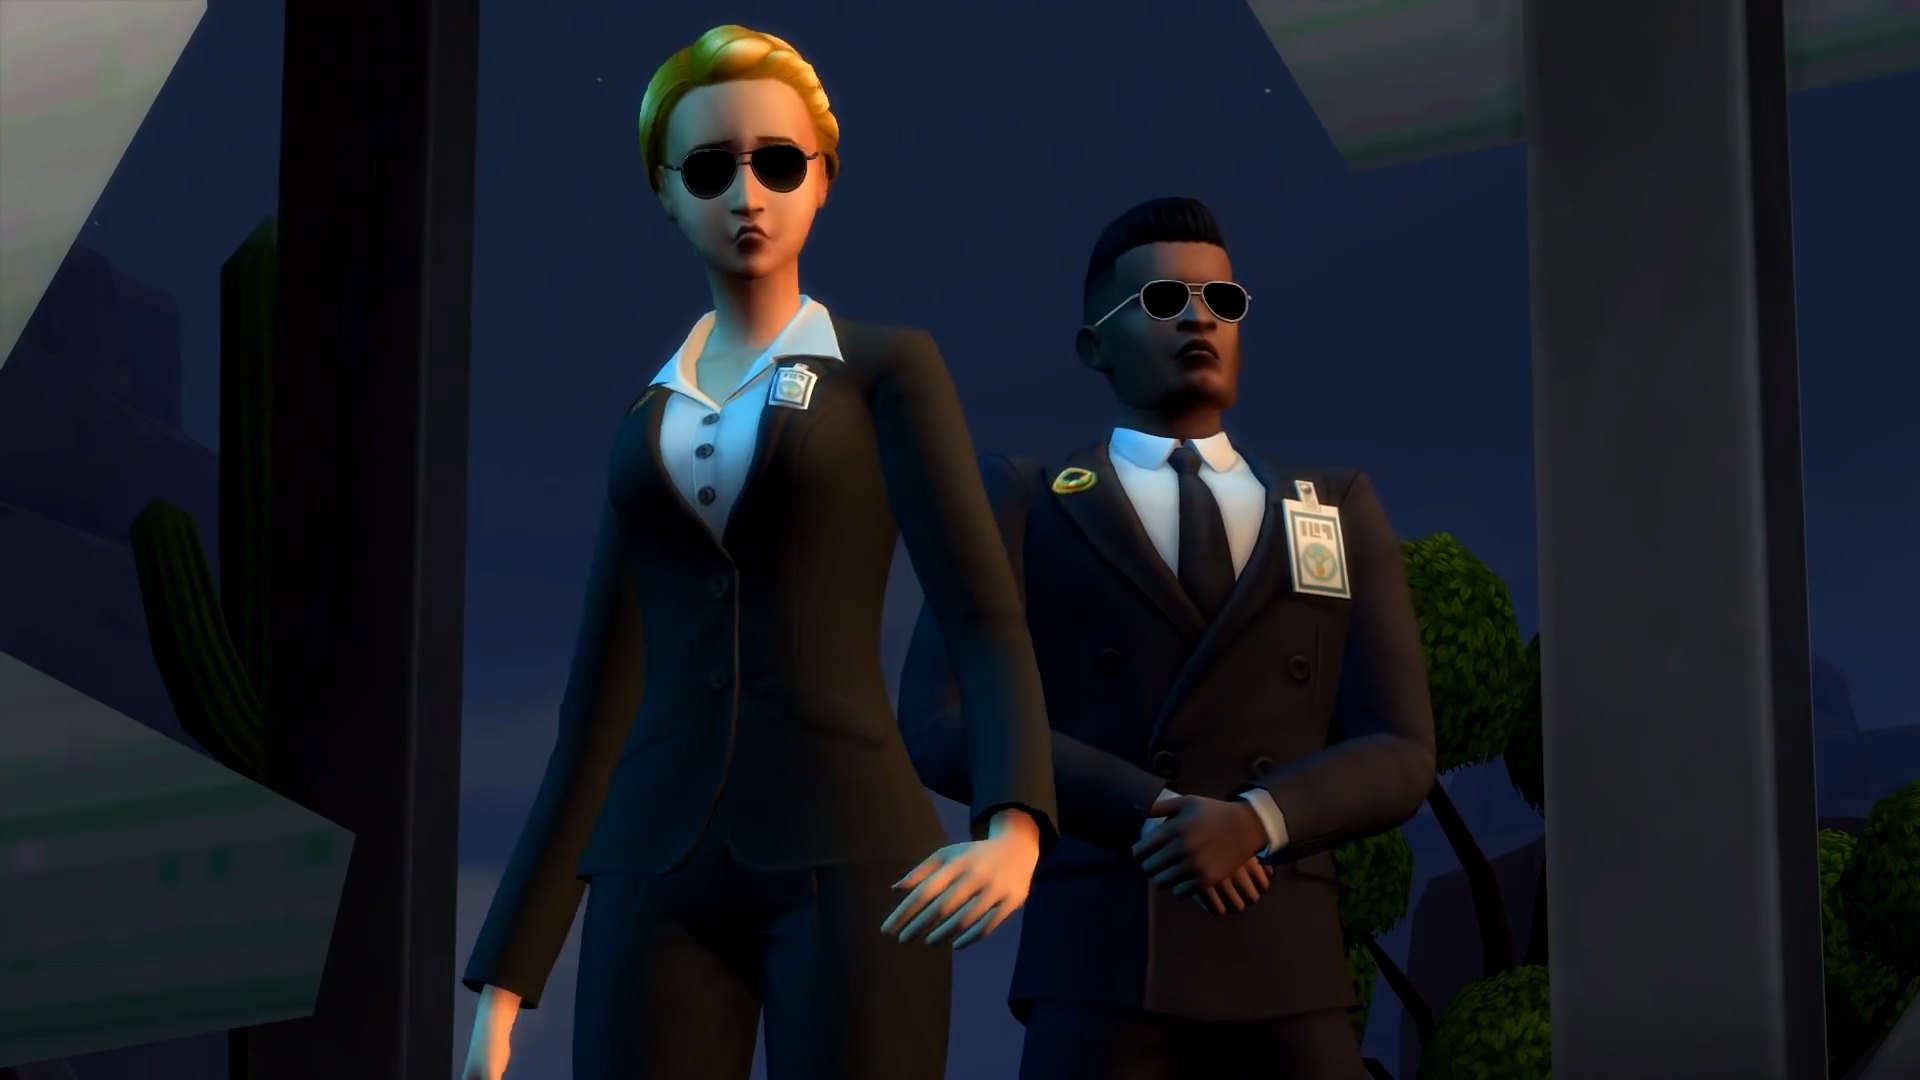 The Sims 4 Strangerville - Government spooks - cia, nsa